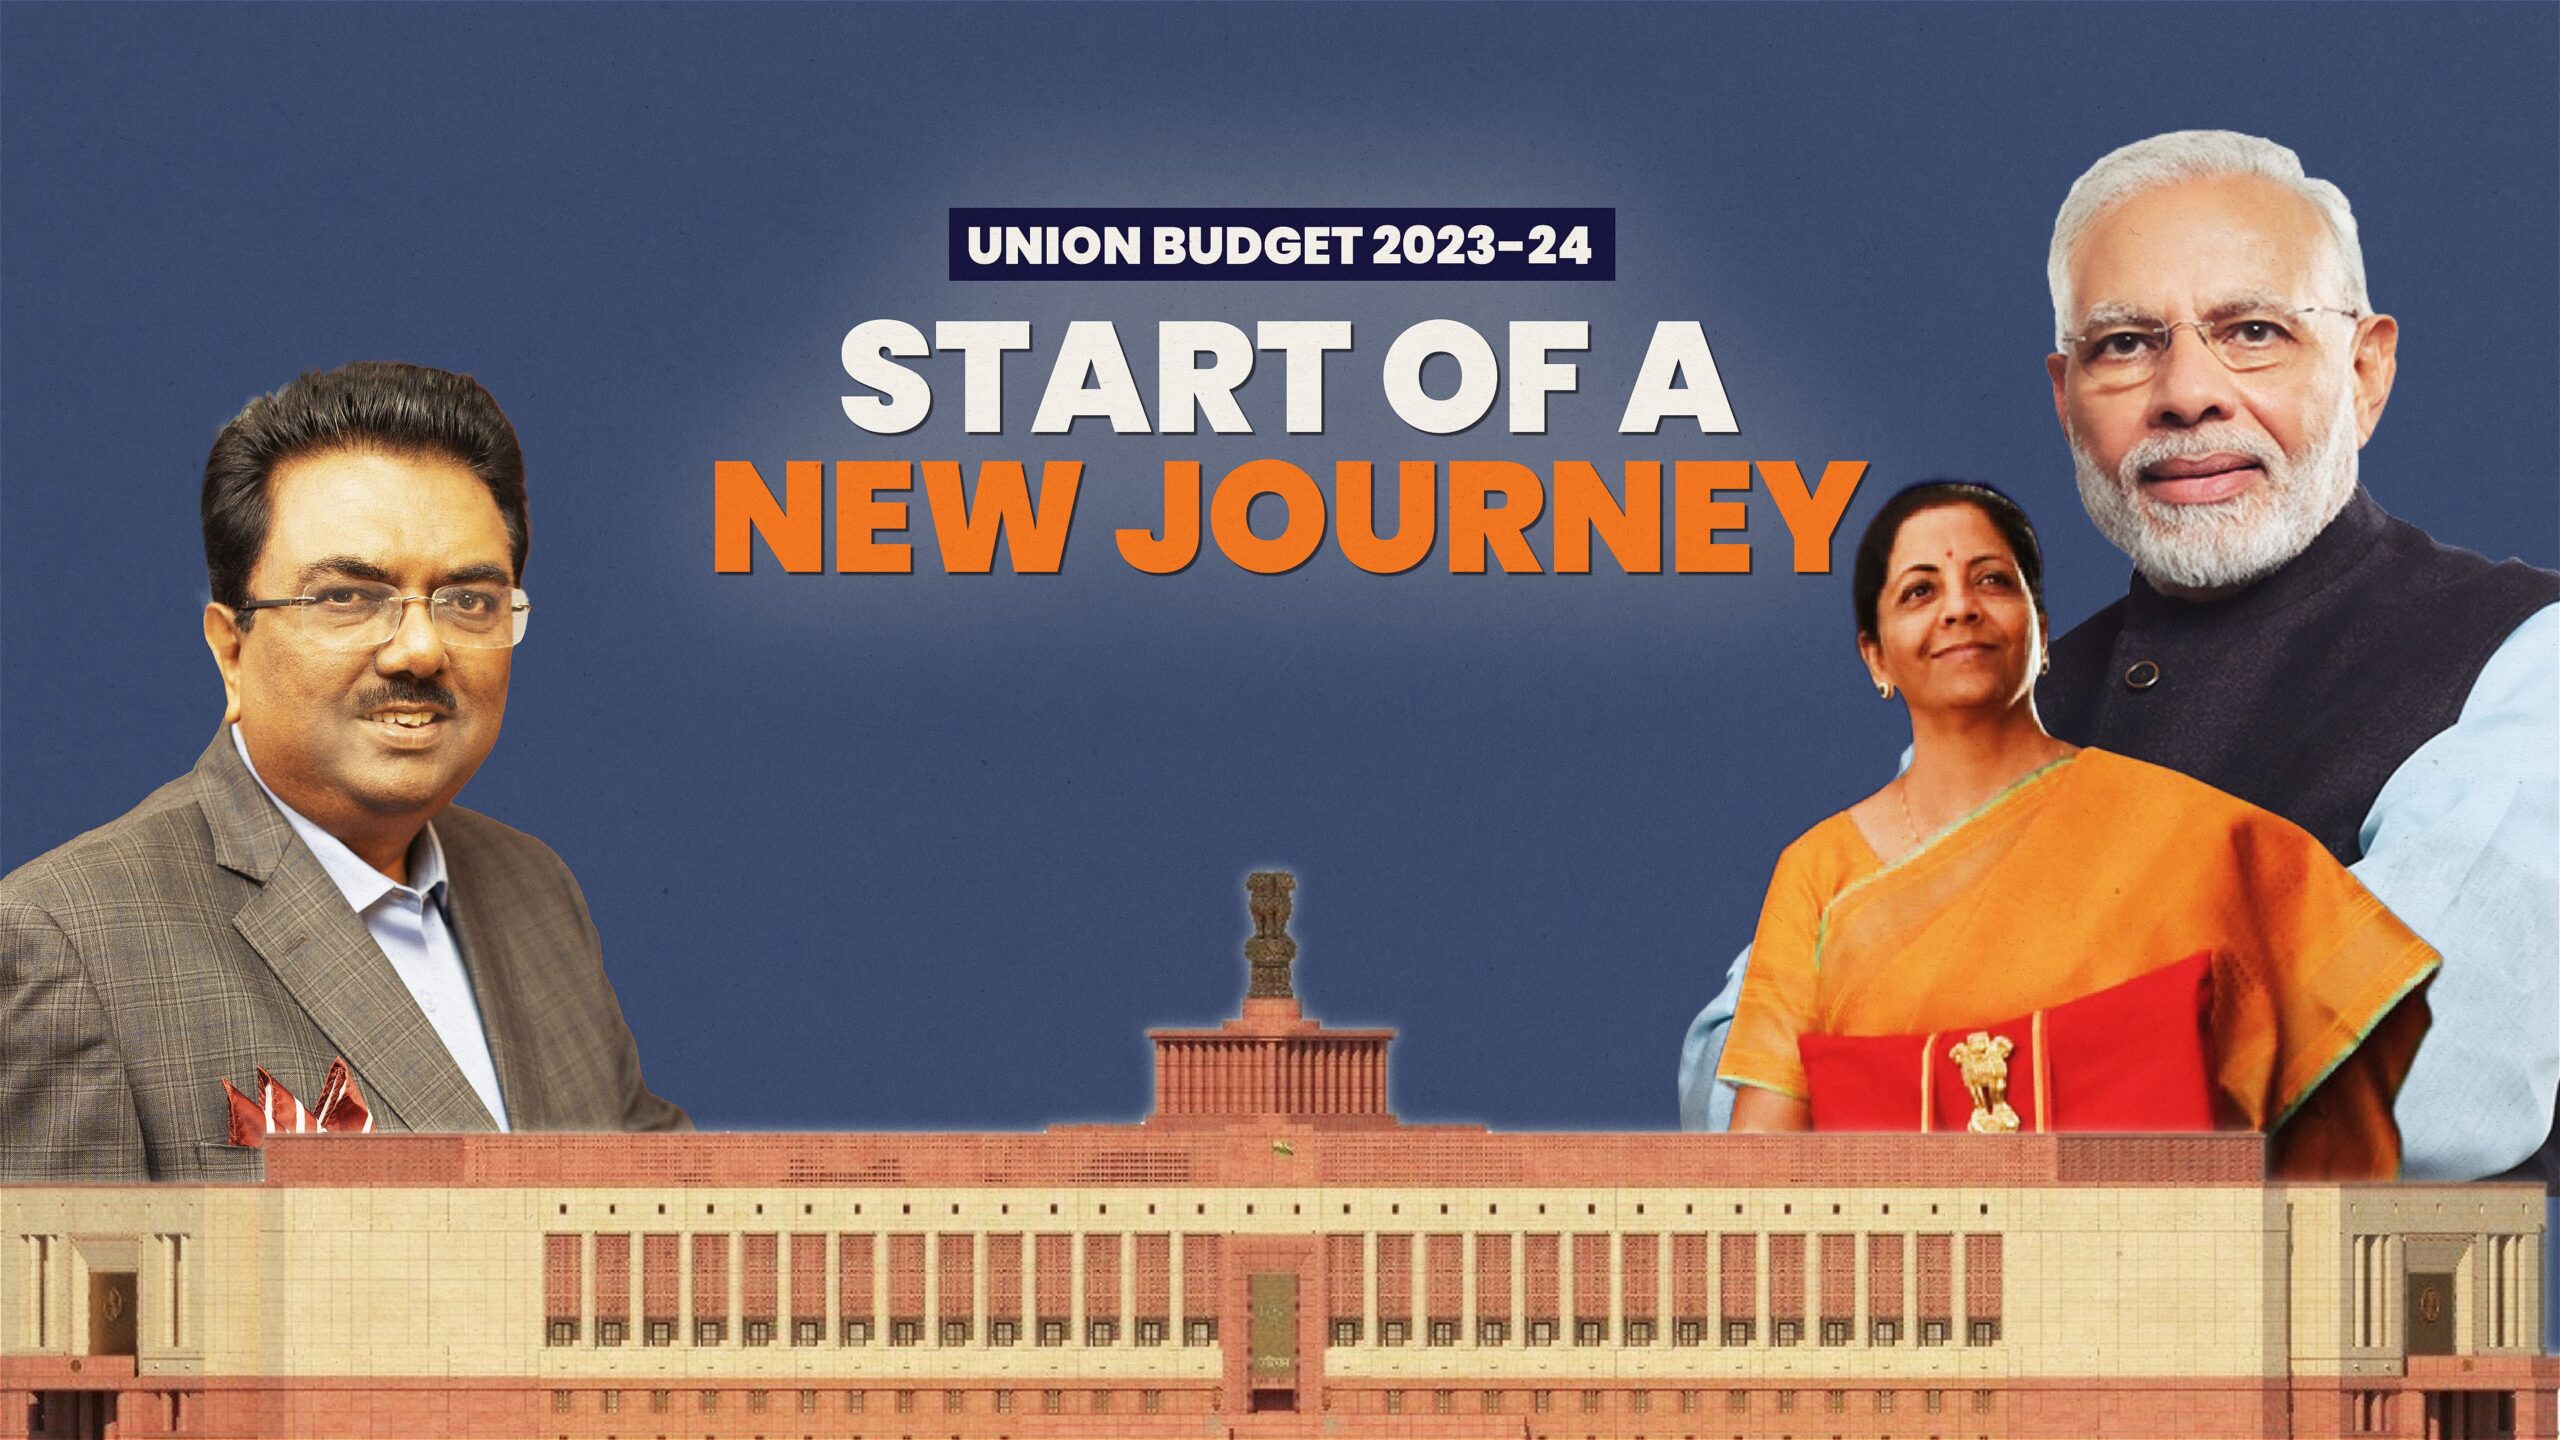 Union Budget 2023-24 – Start of a New Journey